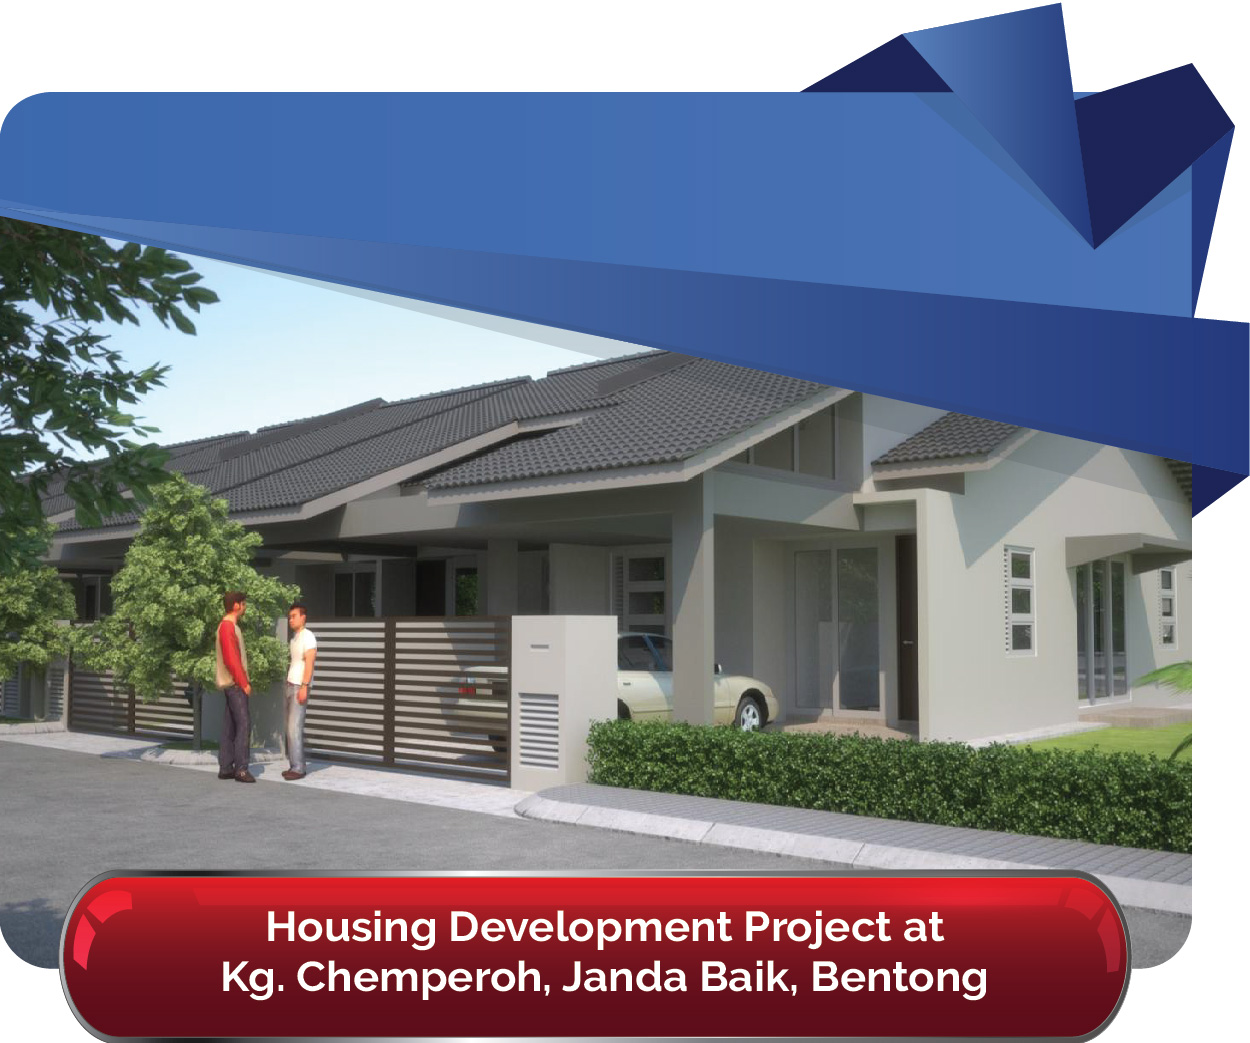 Housing Development Project at Kg. Chemperoh Janda Baik Bentong 01